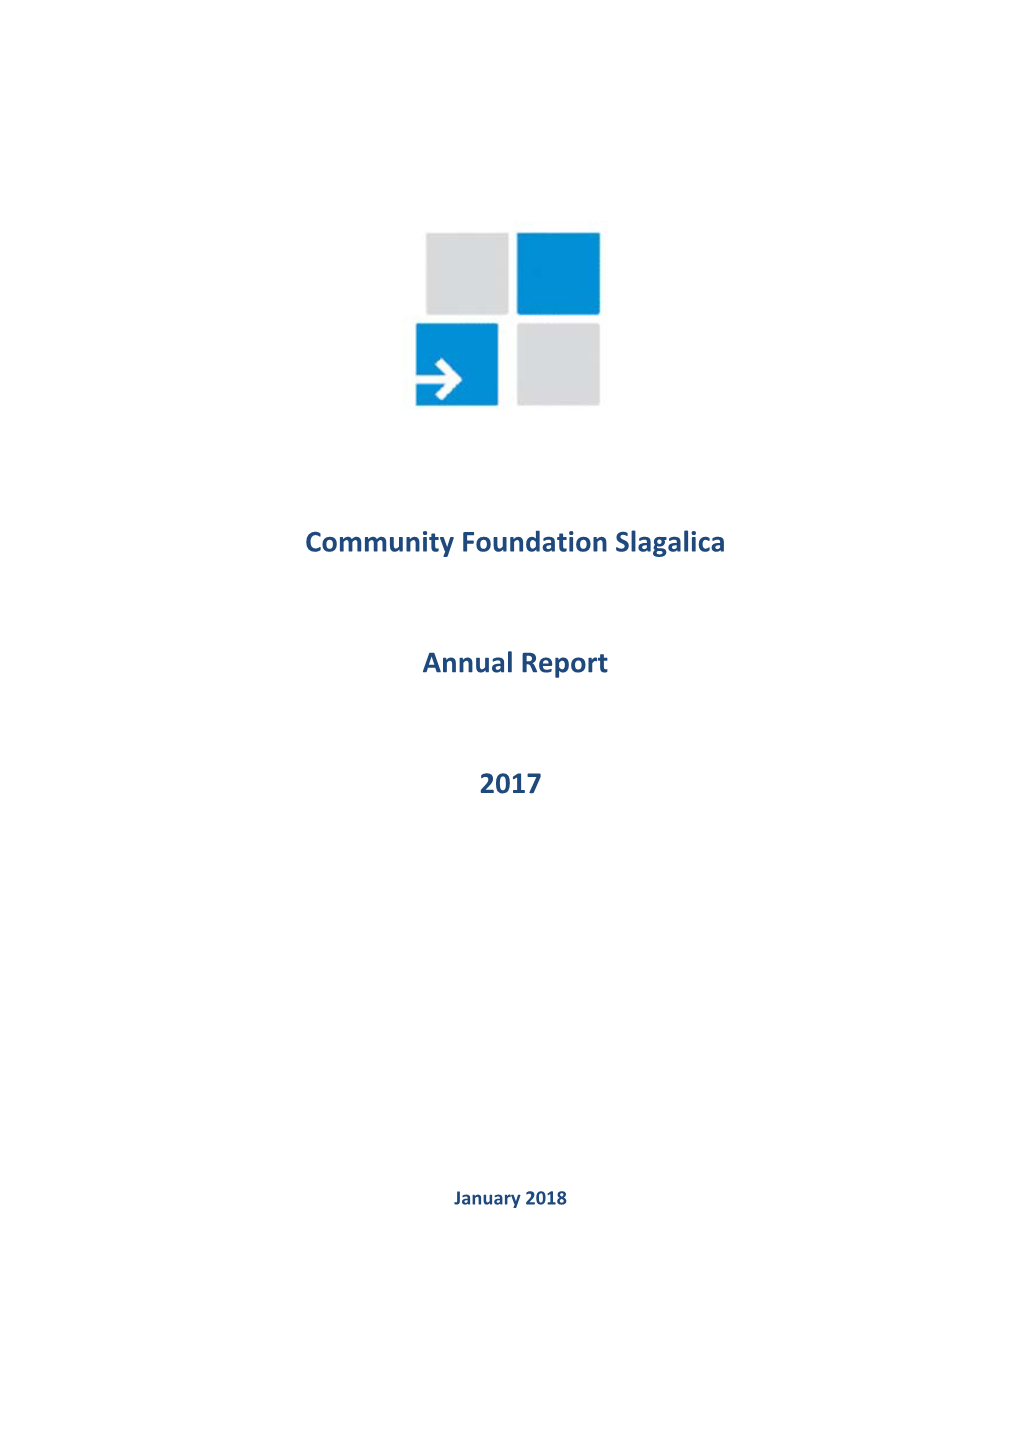 Community Foundation Slagalica Annual Report 2017